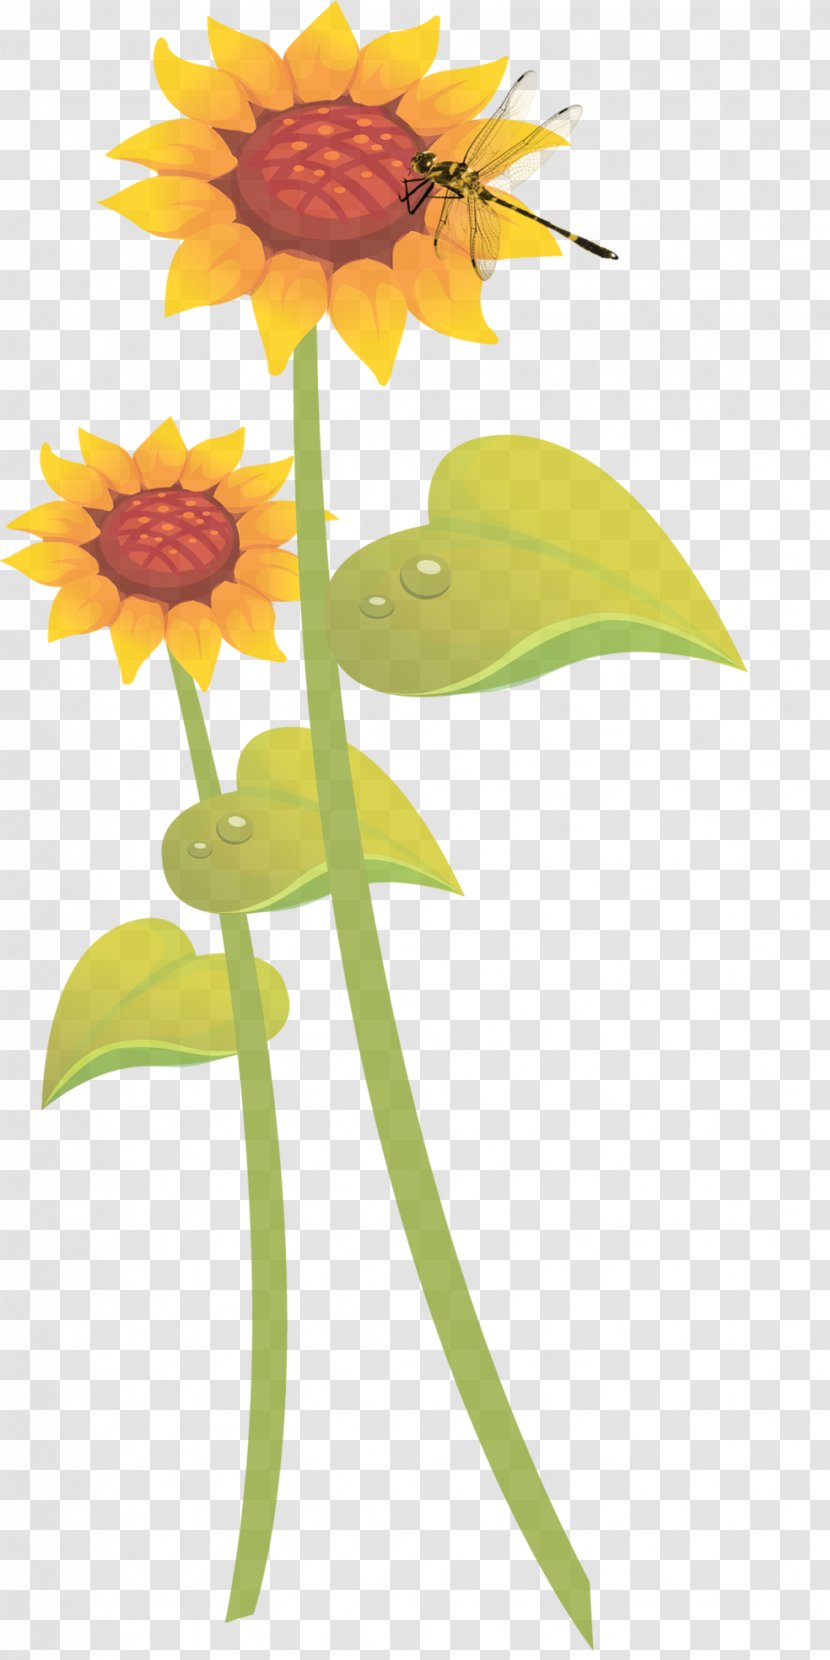 Common Sunflower Student Movement Illustration - Hand-painted Decorative Plants Transparent PNG